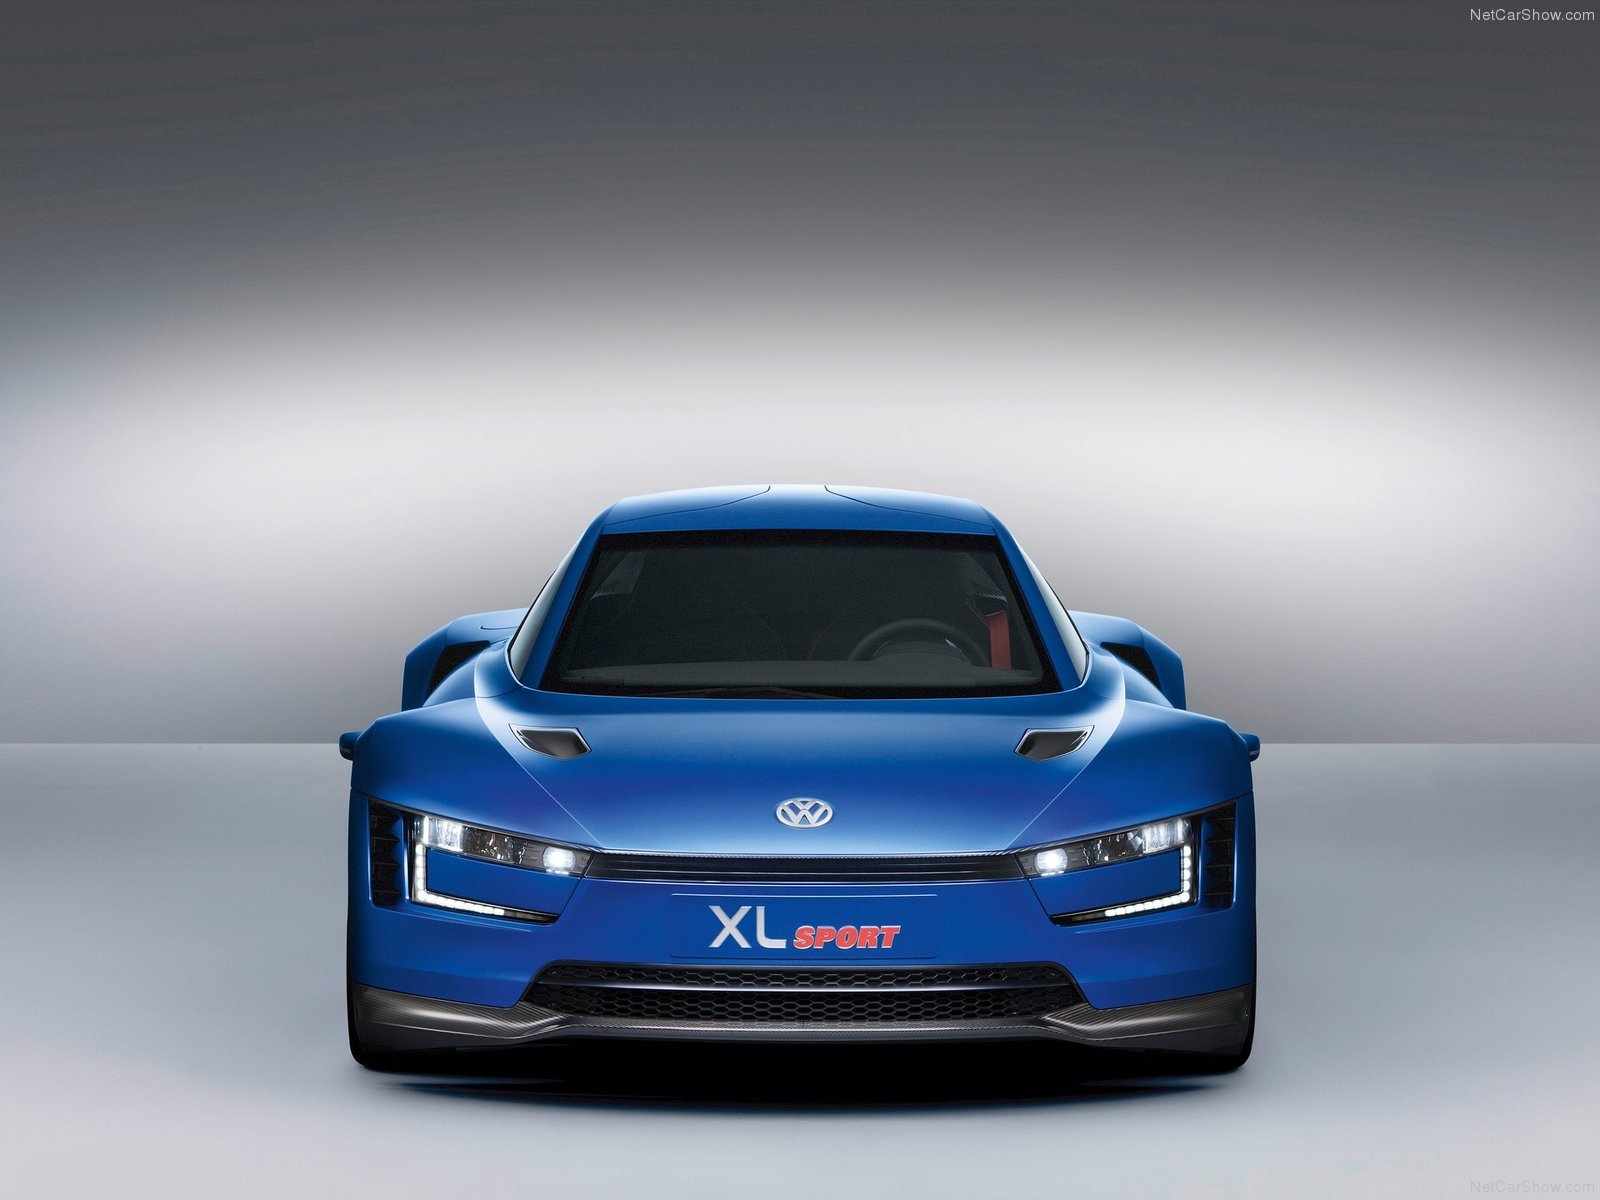 volkswagen, Xl sport, Concept, 2014, Cars Wallpaper